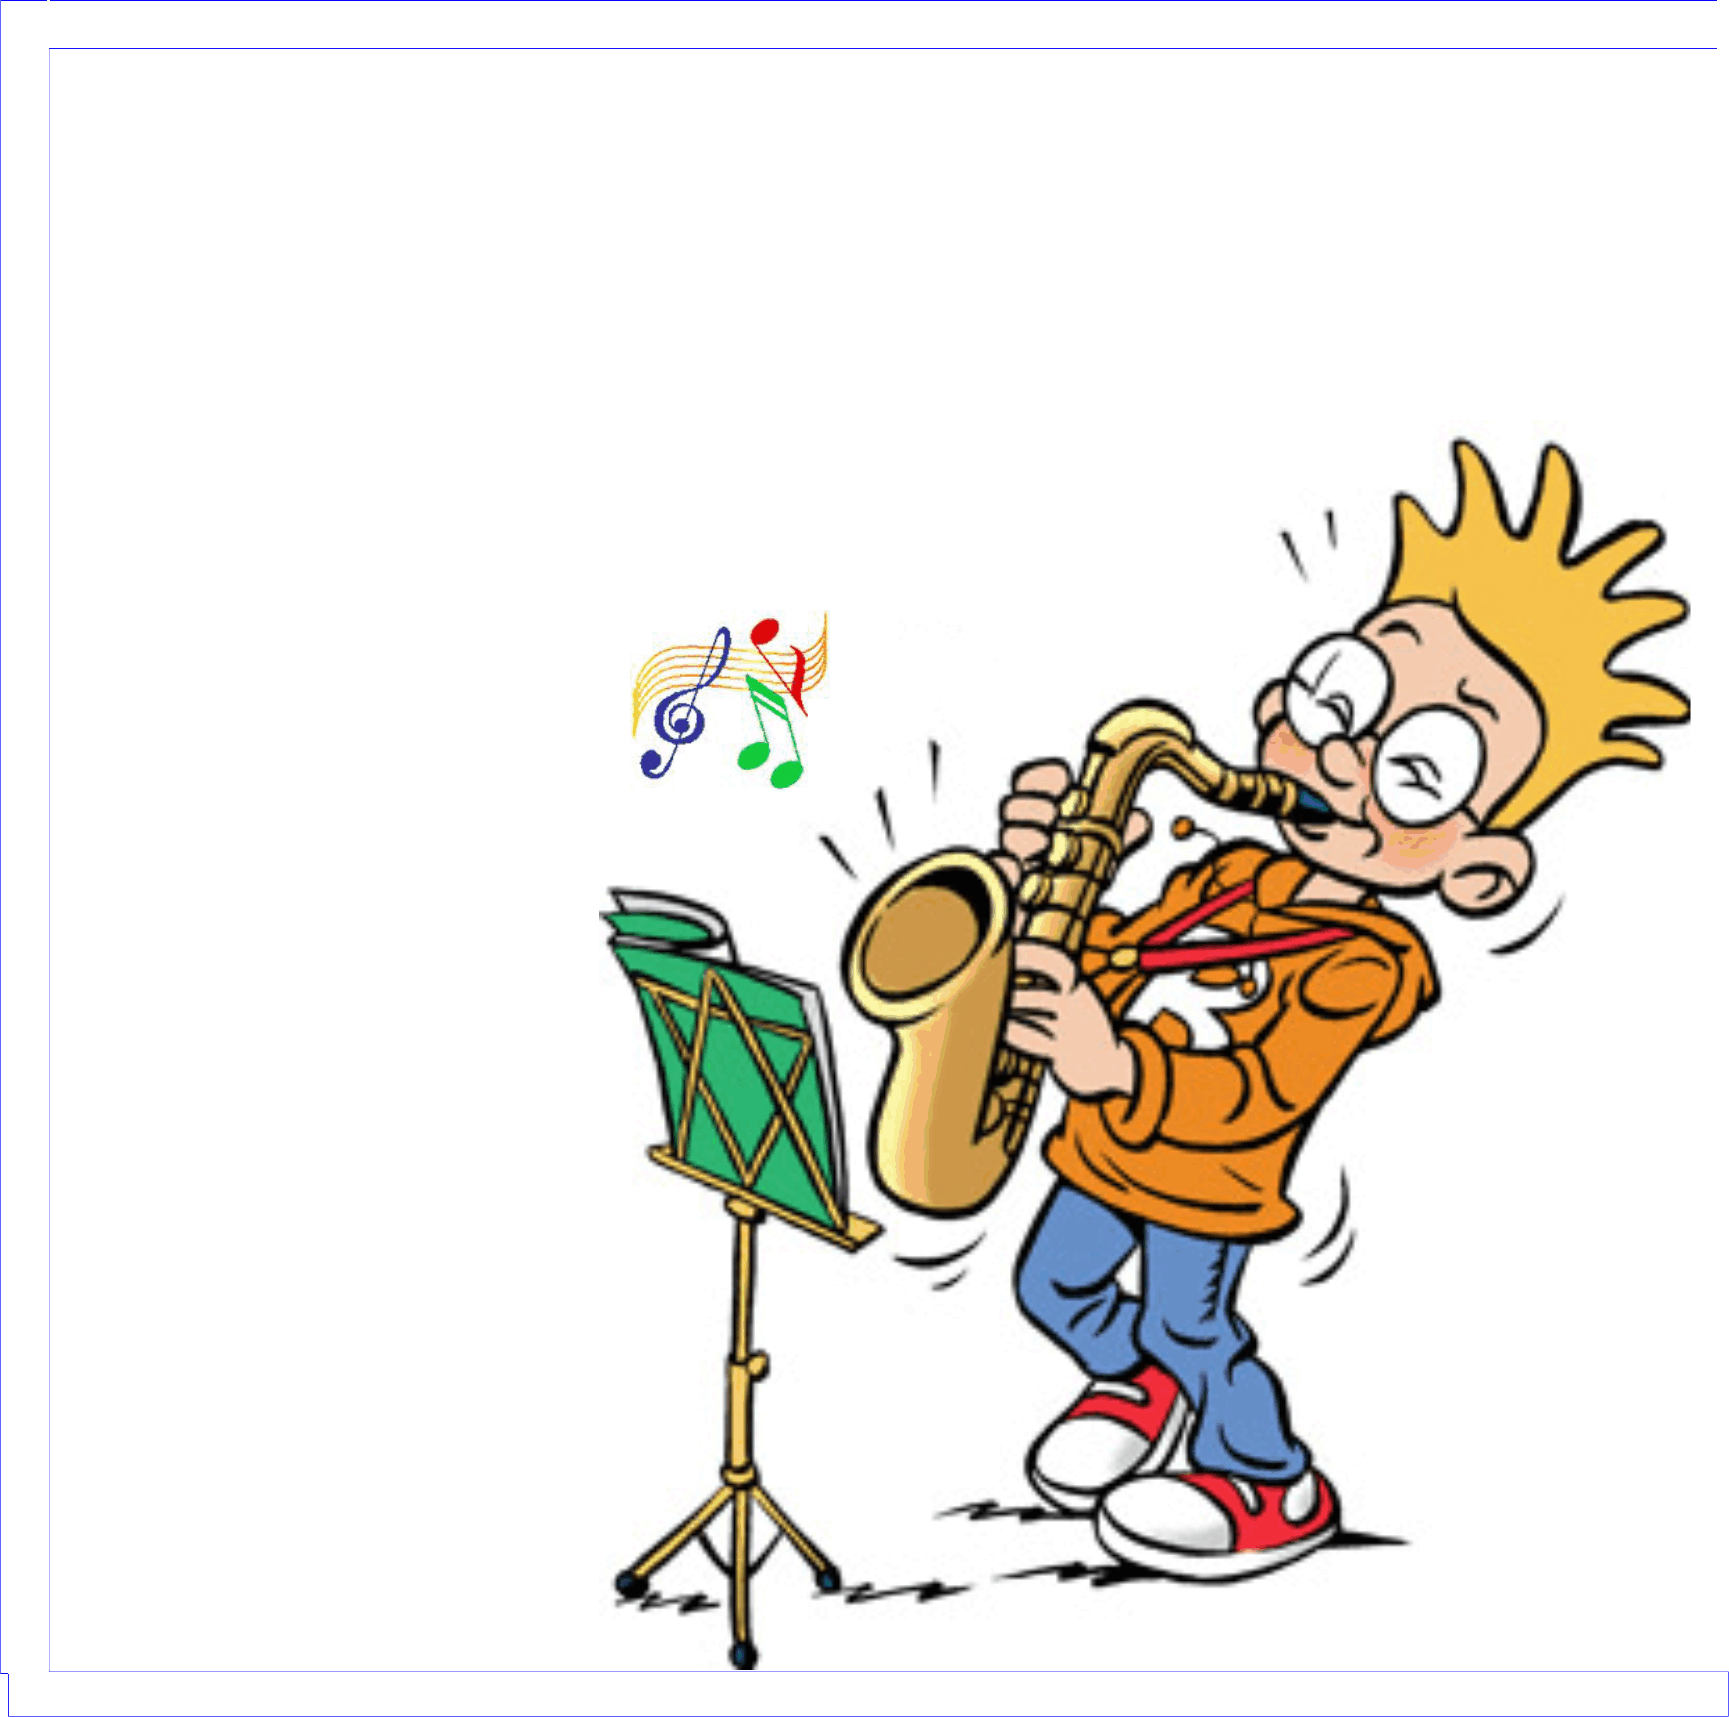  Bart speelt saxofoon